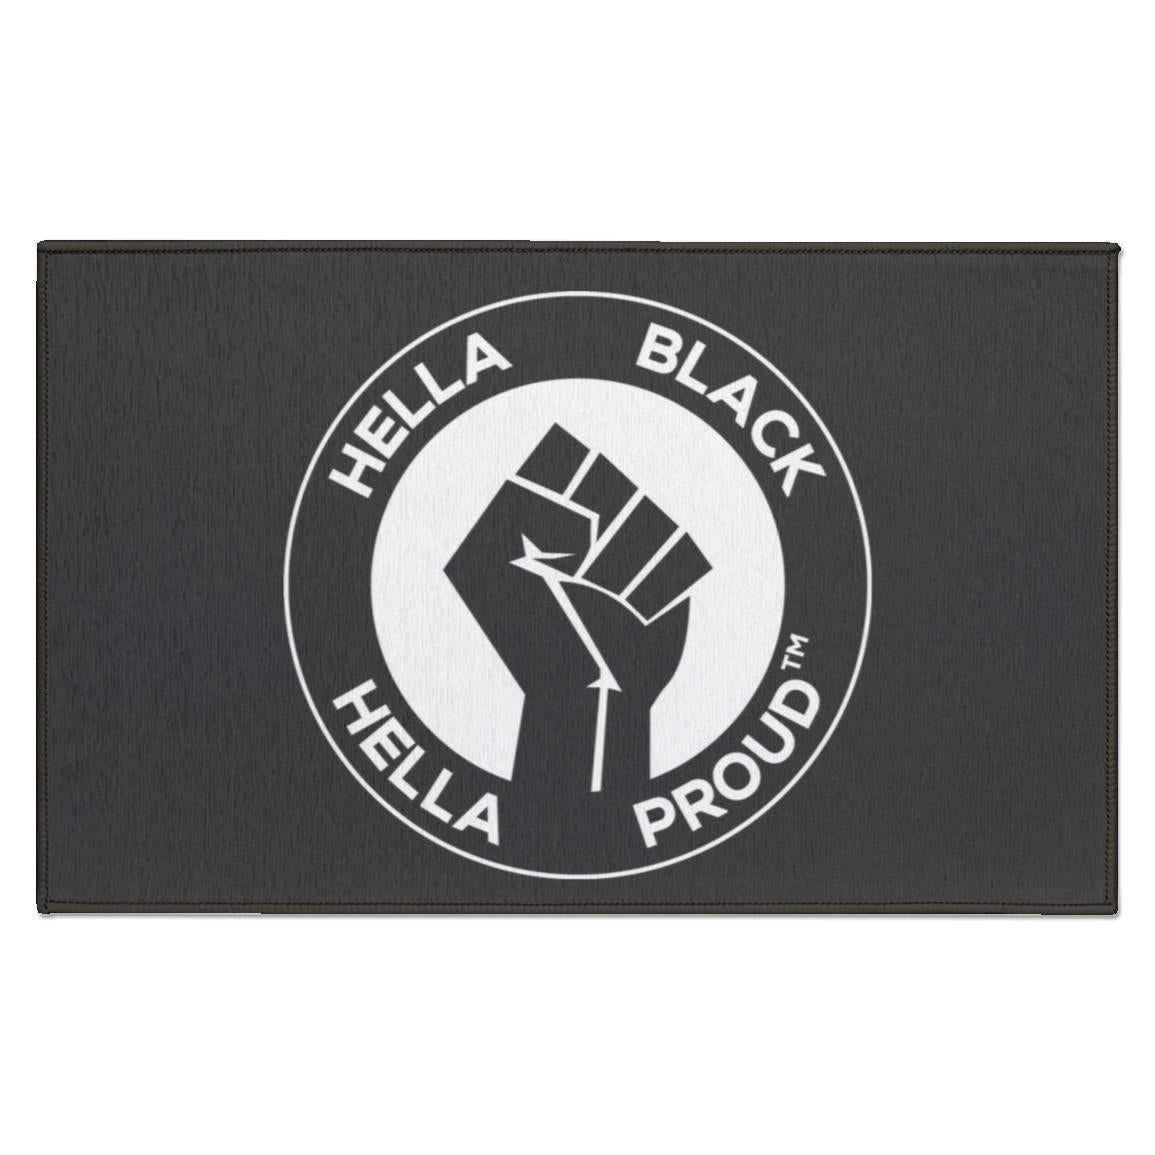 Indoor door mat with our "Hella Black Hella Proud" logo printed in the center.